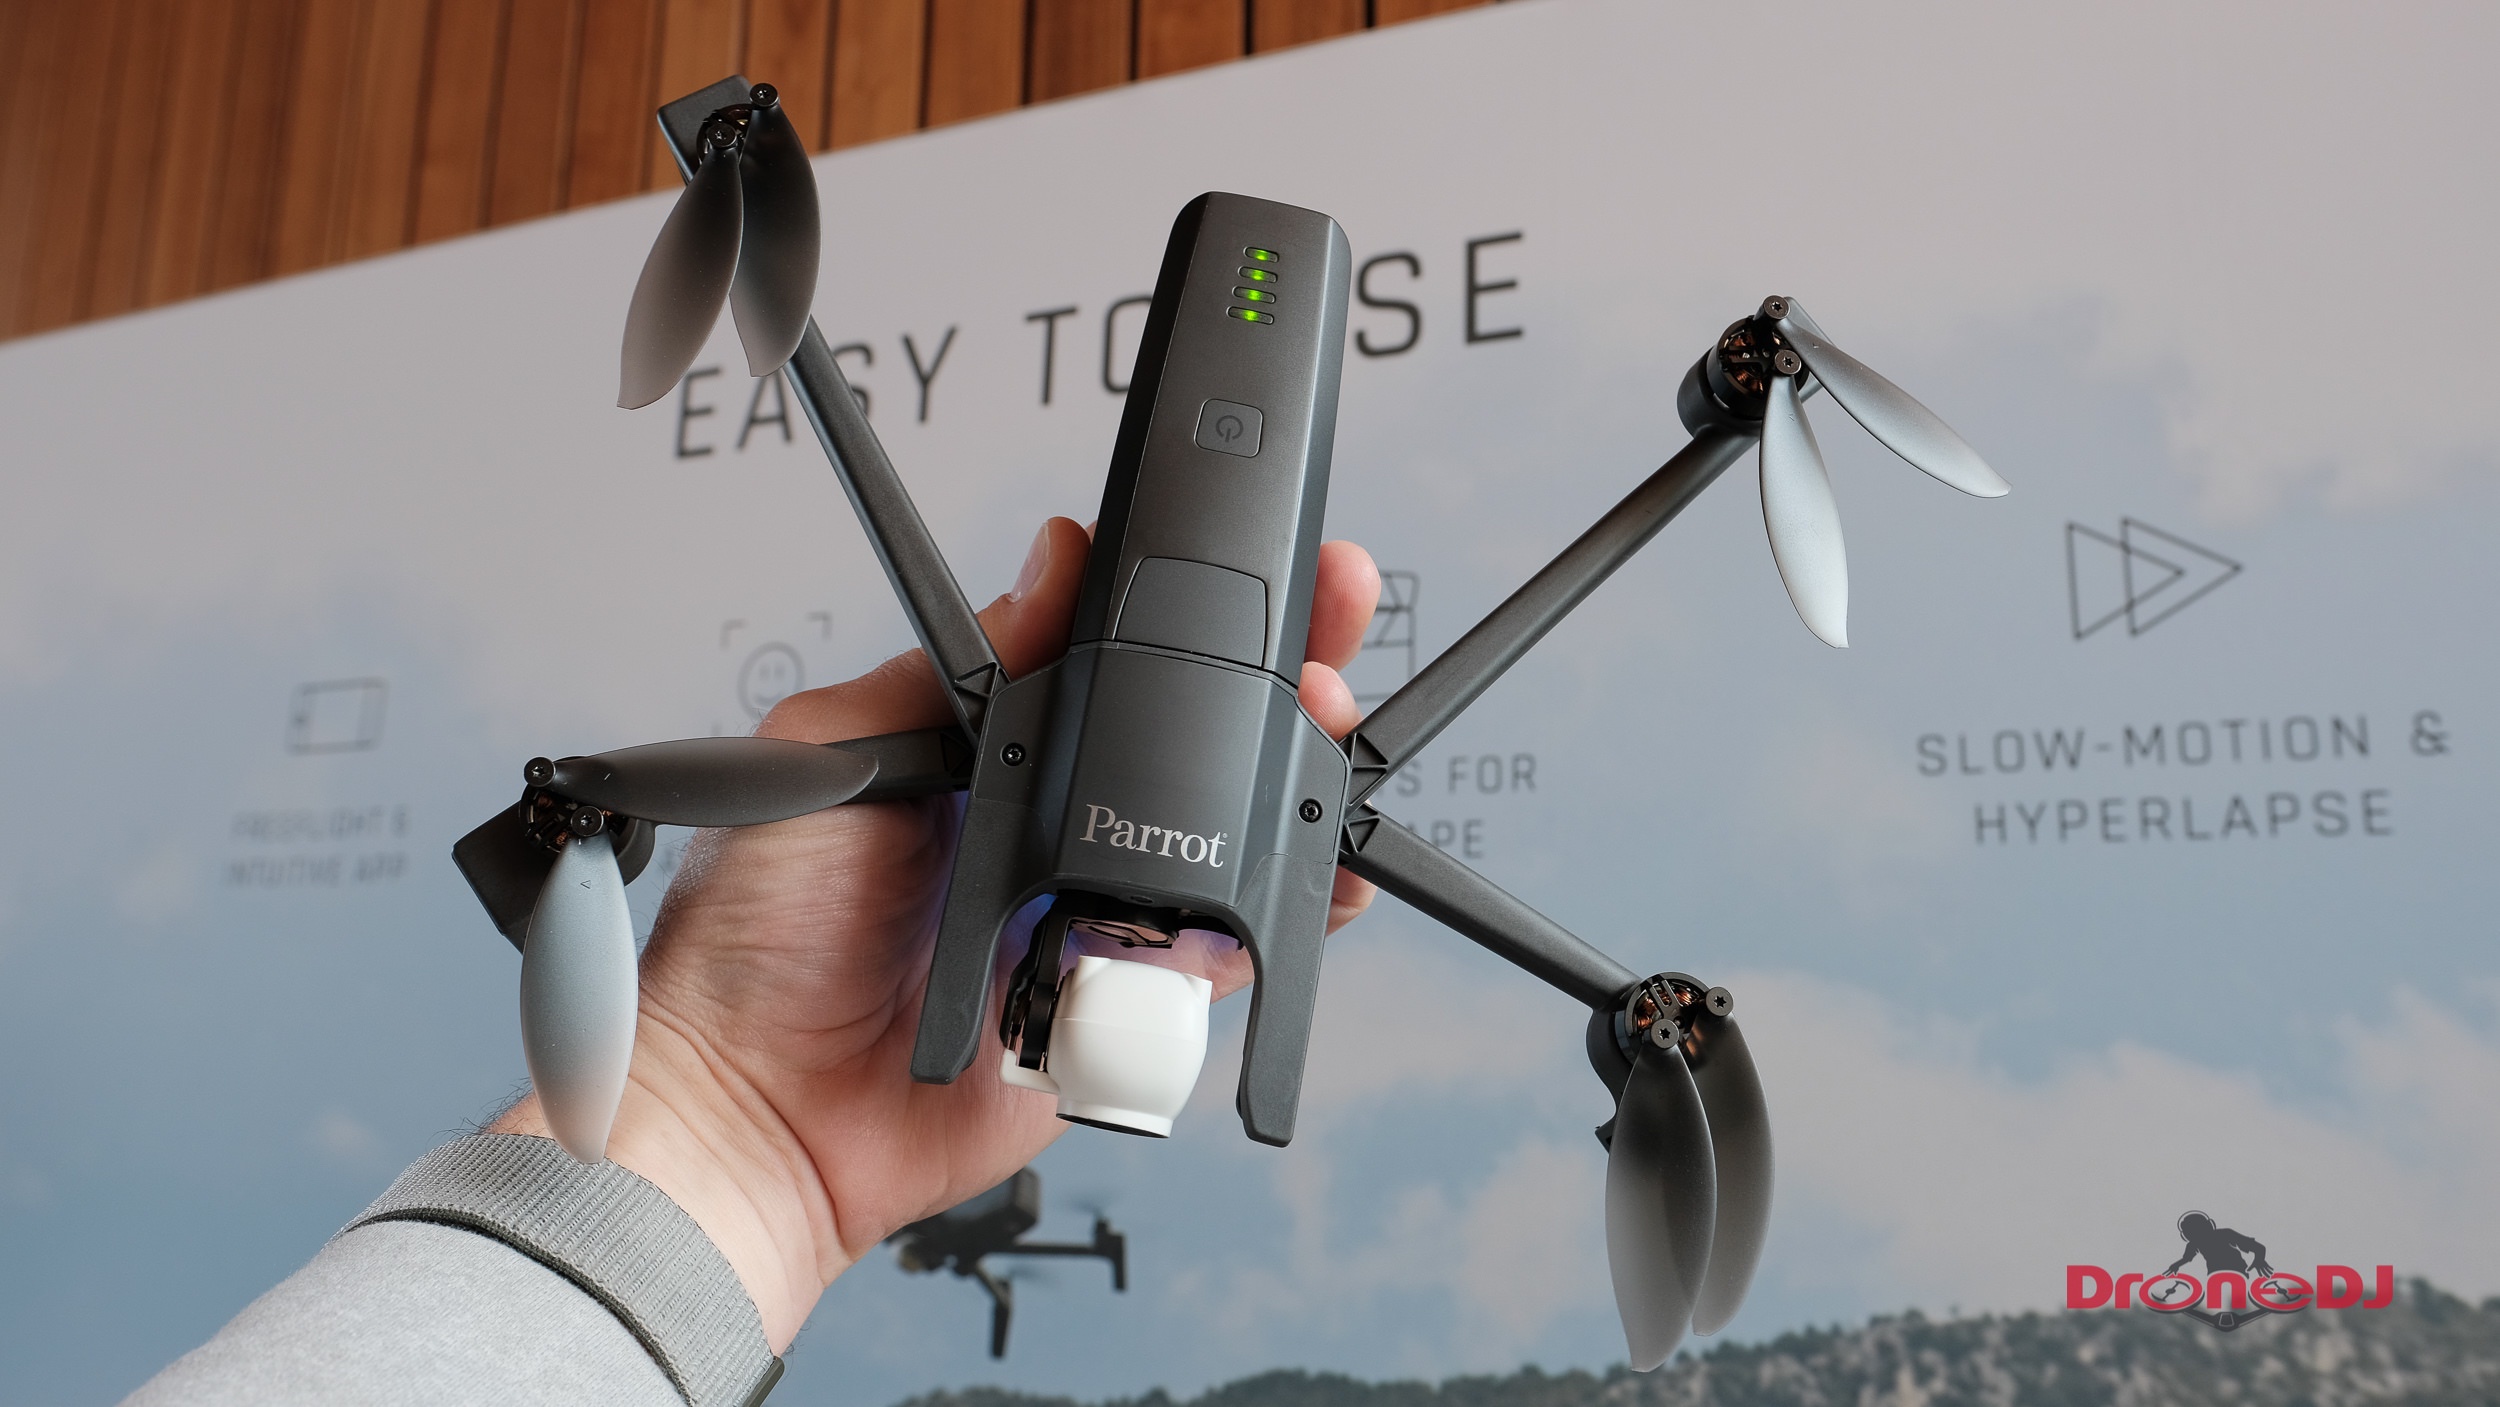 drone anafi 4k